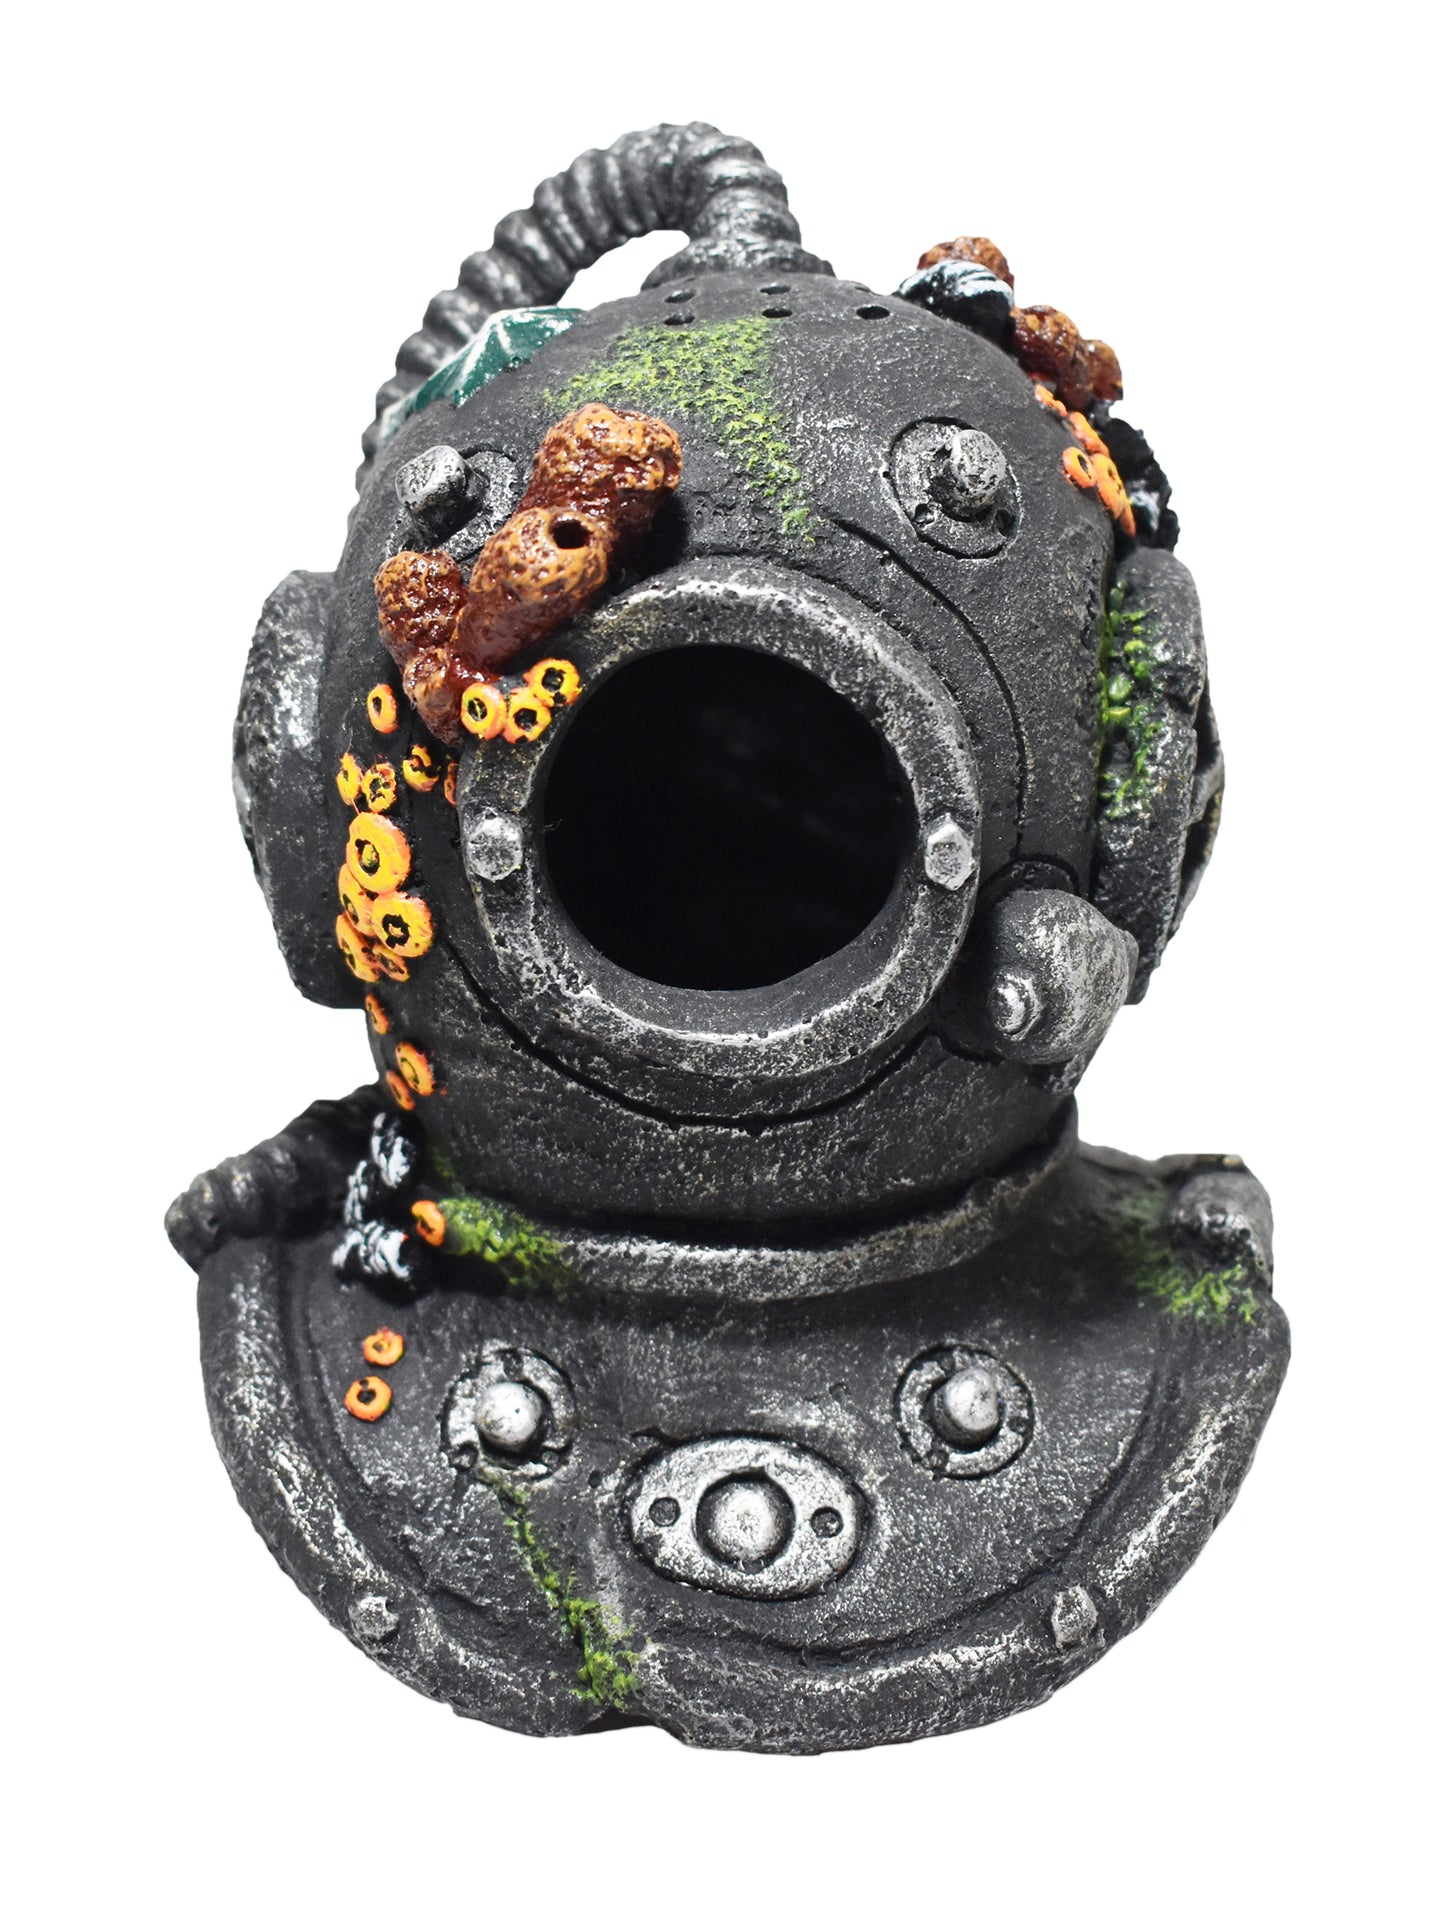 6.7" Diving Helmet W/Coral Resin Ornament - Map Price $25.29